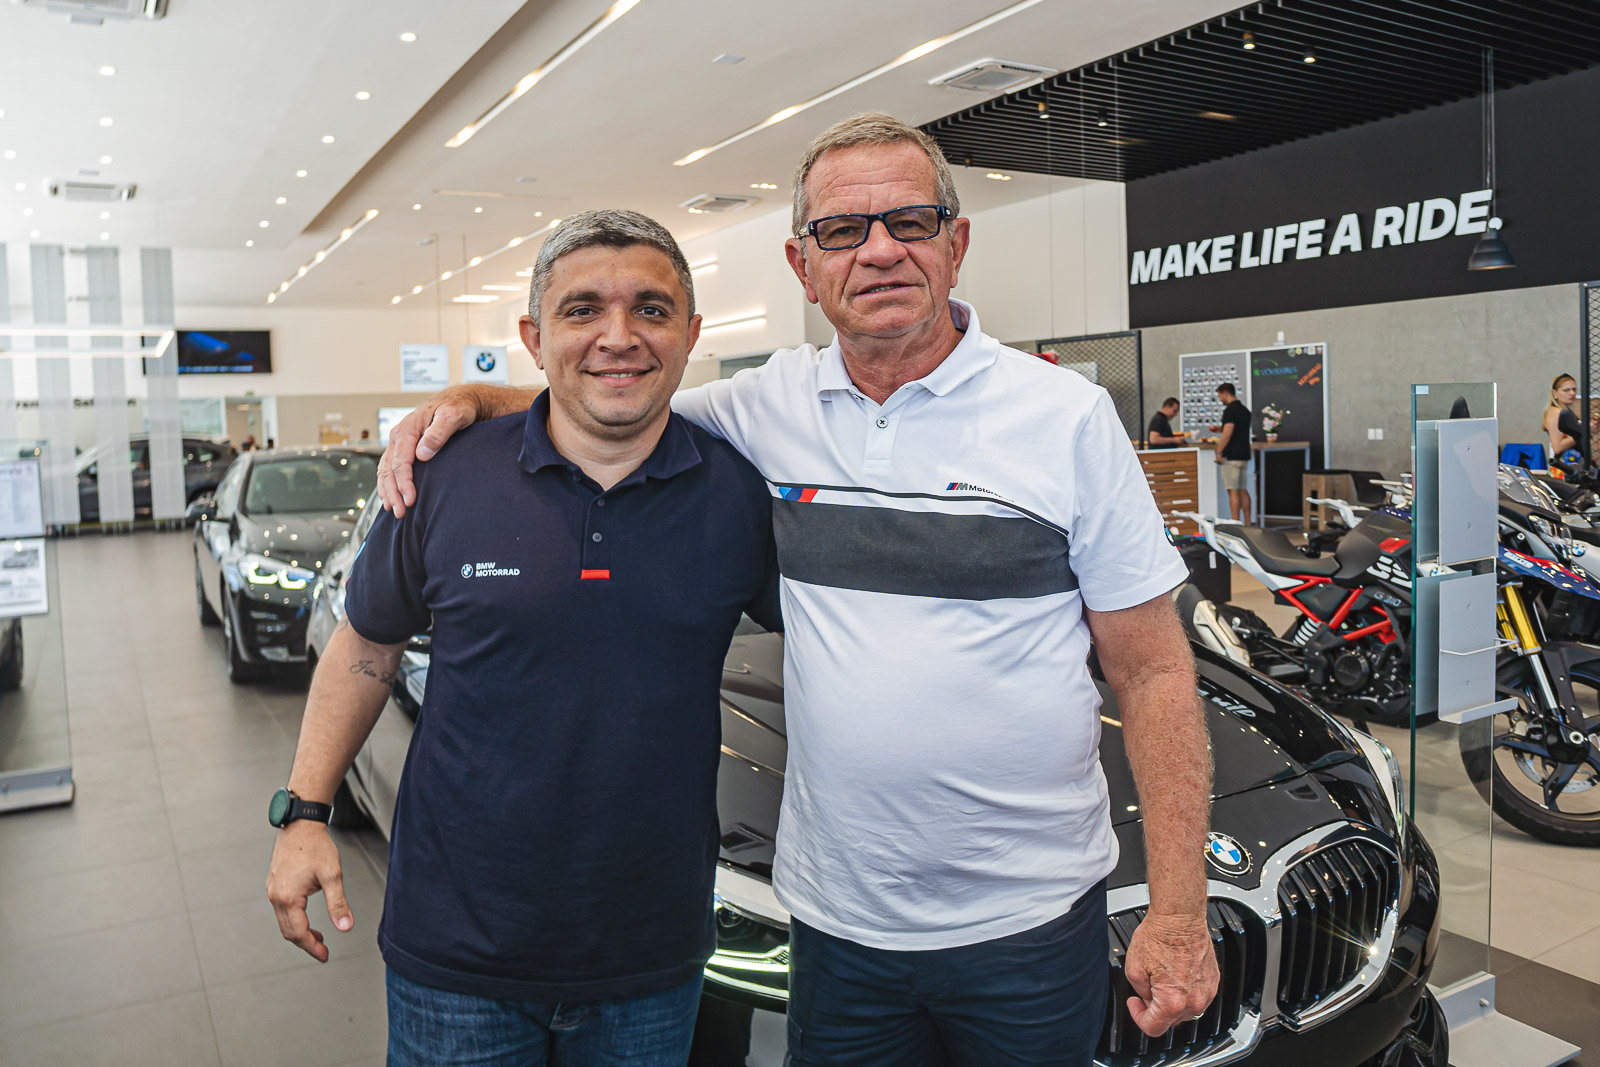 Haus Motors Fortaleza promove BMW RoadShow Experience e recebe Ingo Hoffmann em seu showroom